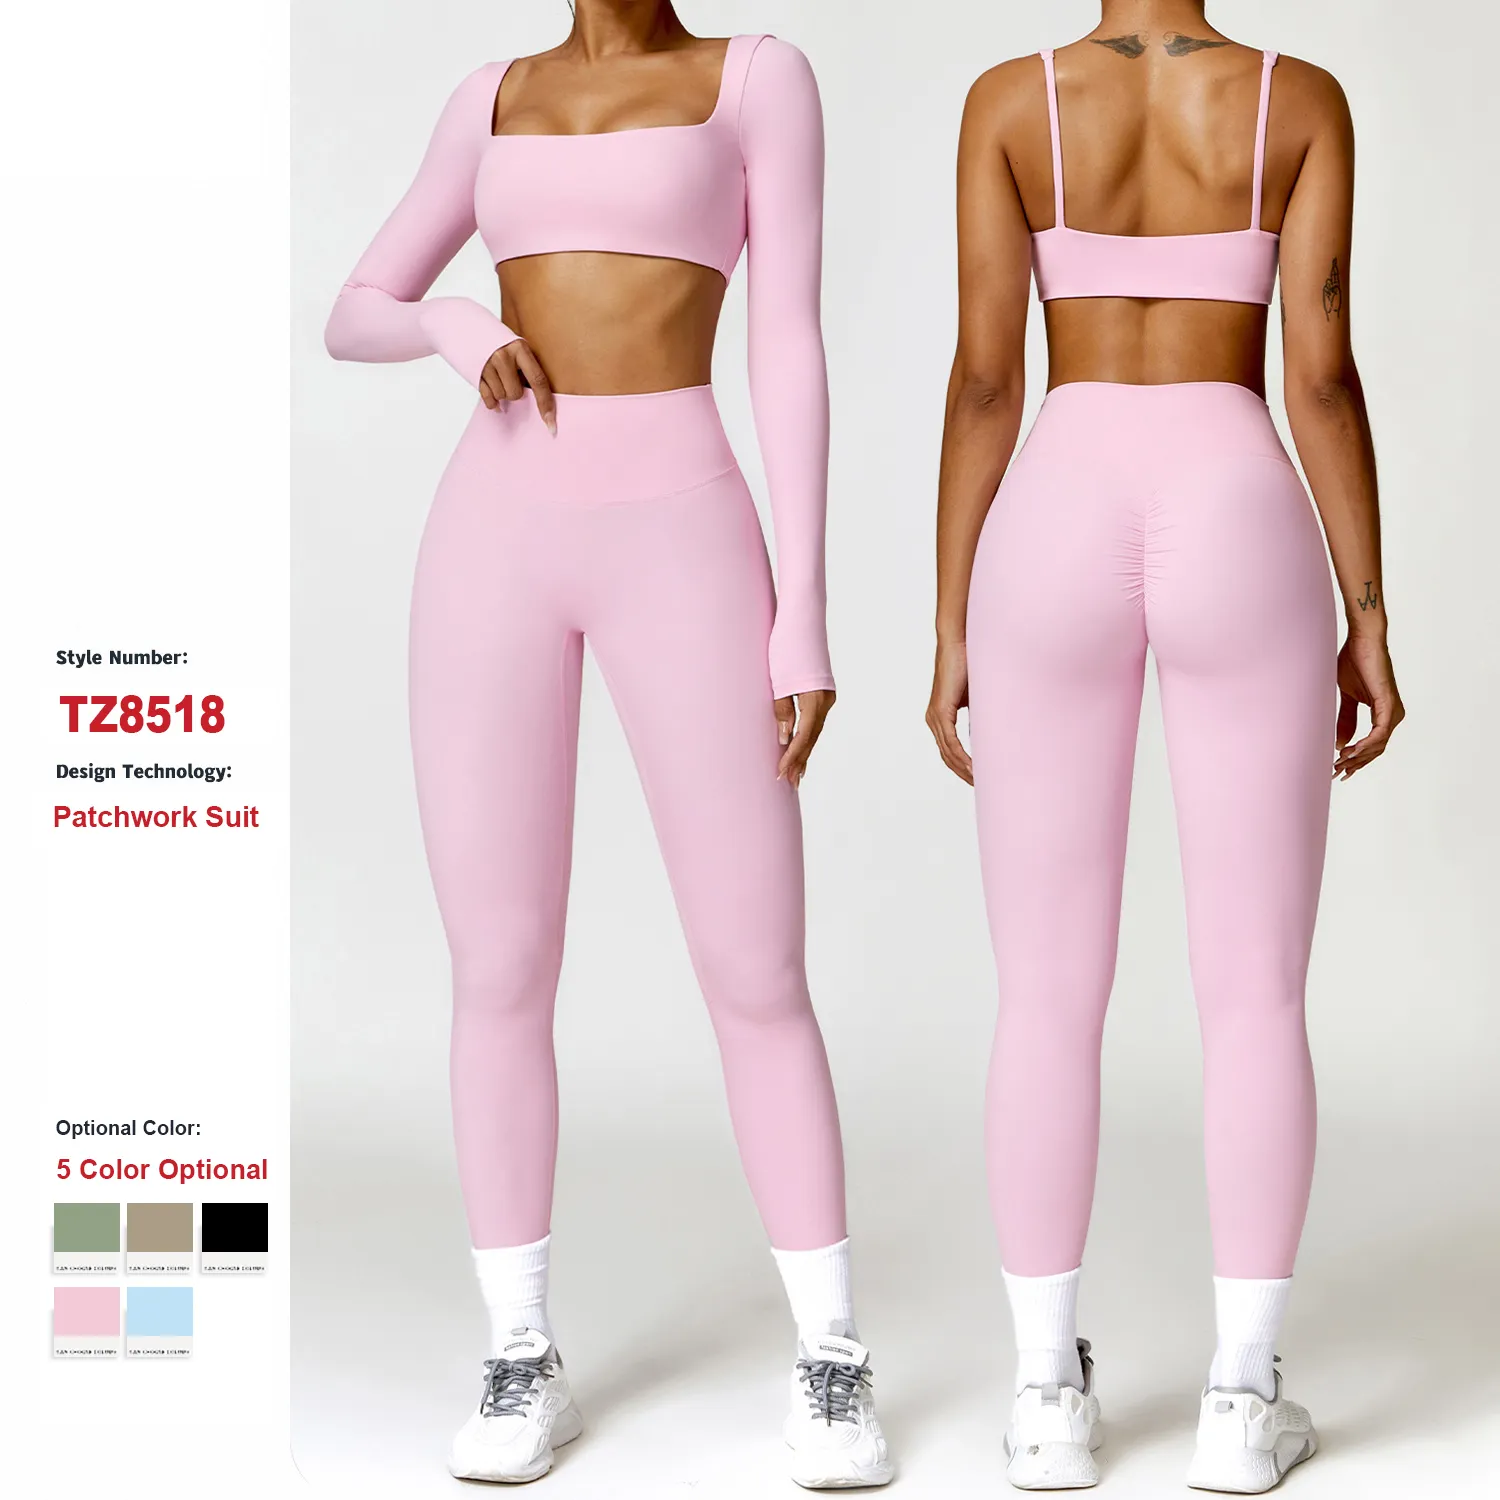 New Design Nylon Material Active Wear Gym Fitness Pants Sportswear High Waist Leggings Sports Bra Yoga Workout Sets For Women